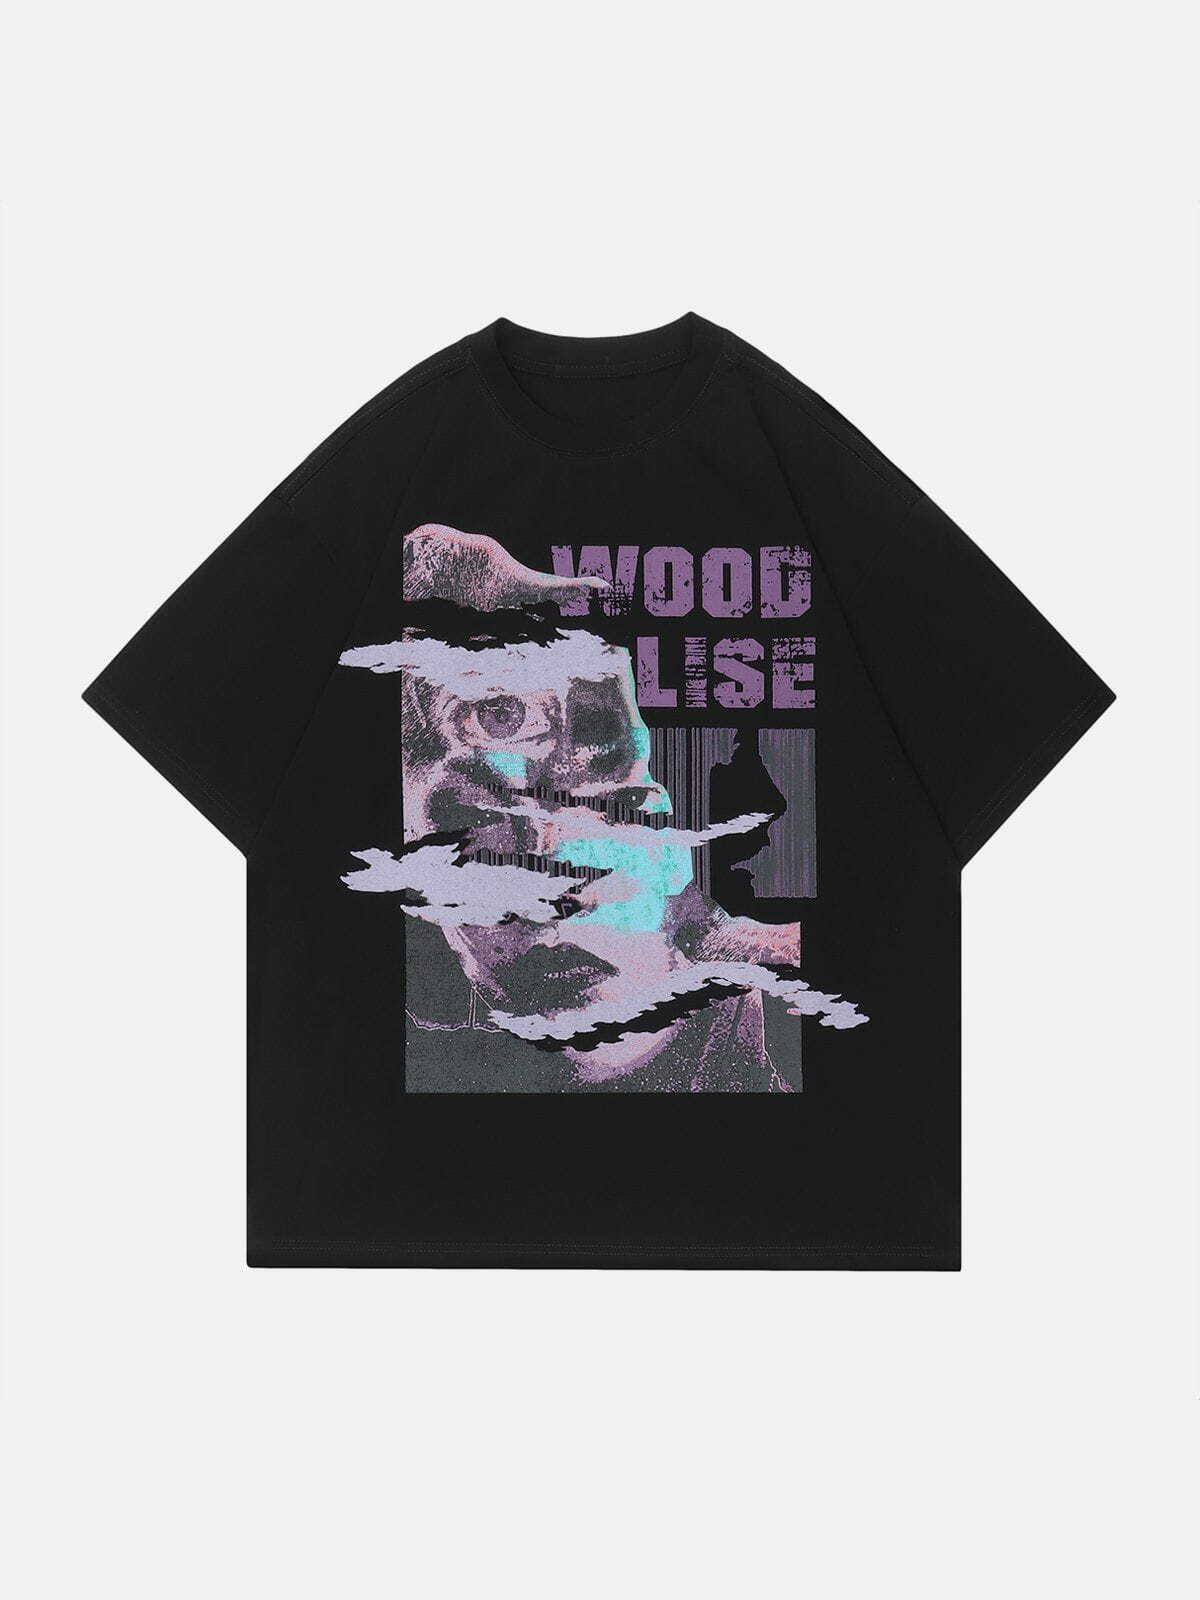 vibrant tie dye abstract tee edgy y2k print shirt 3244